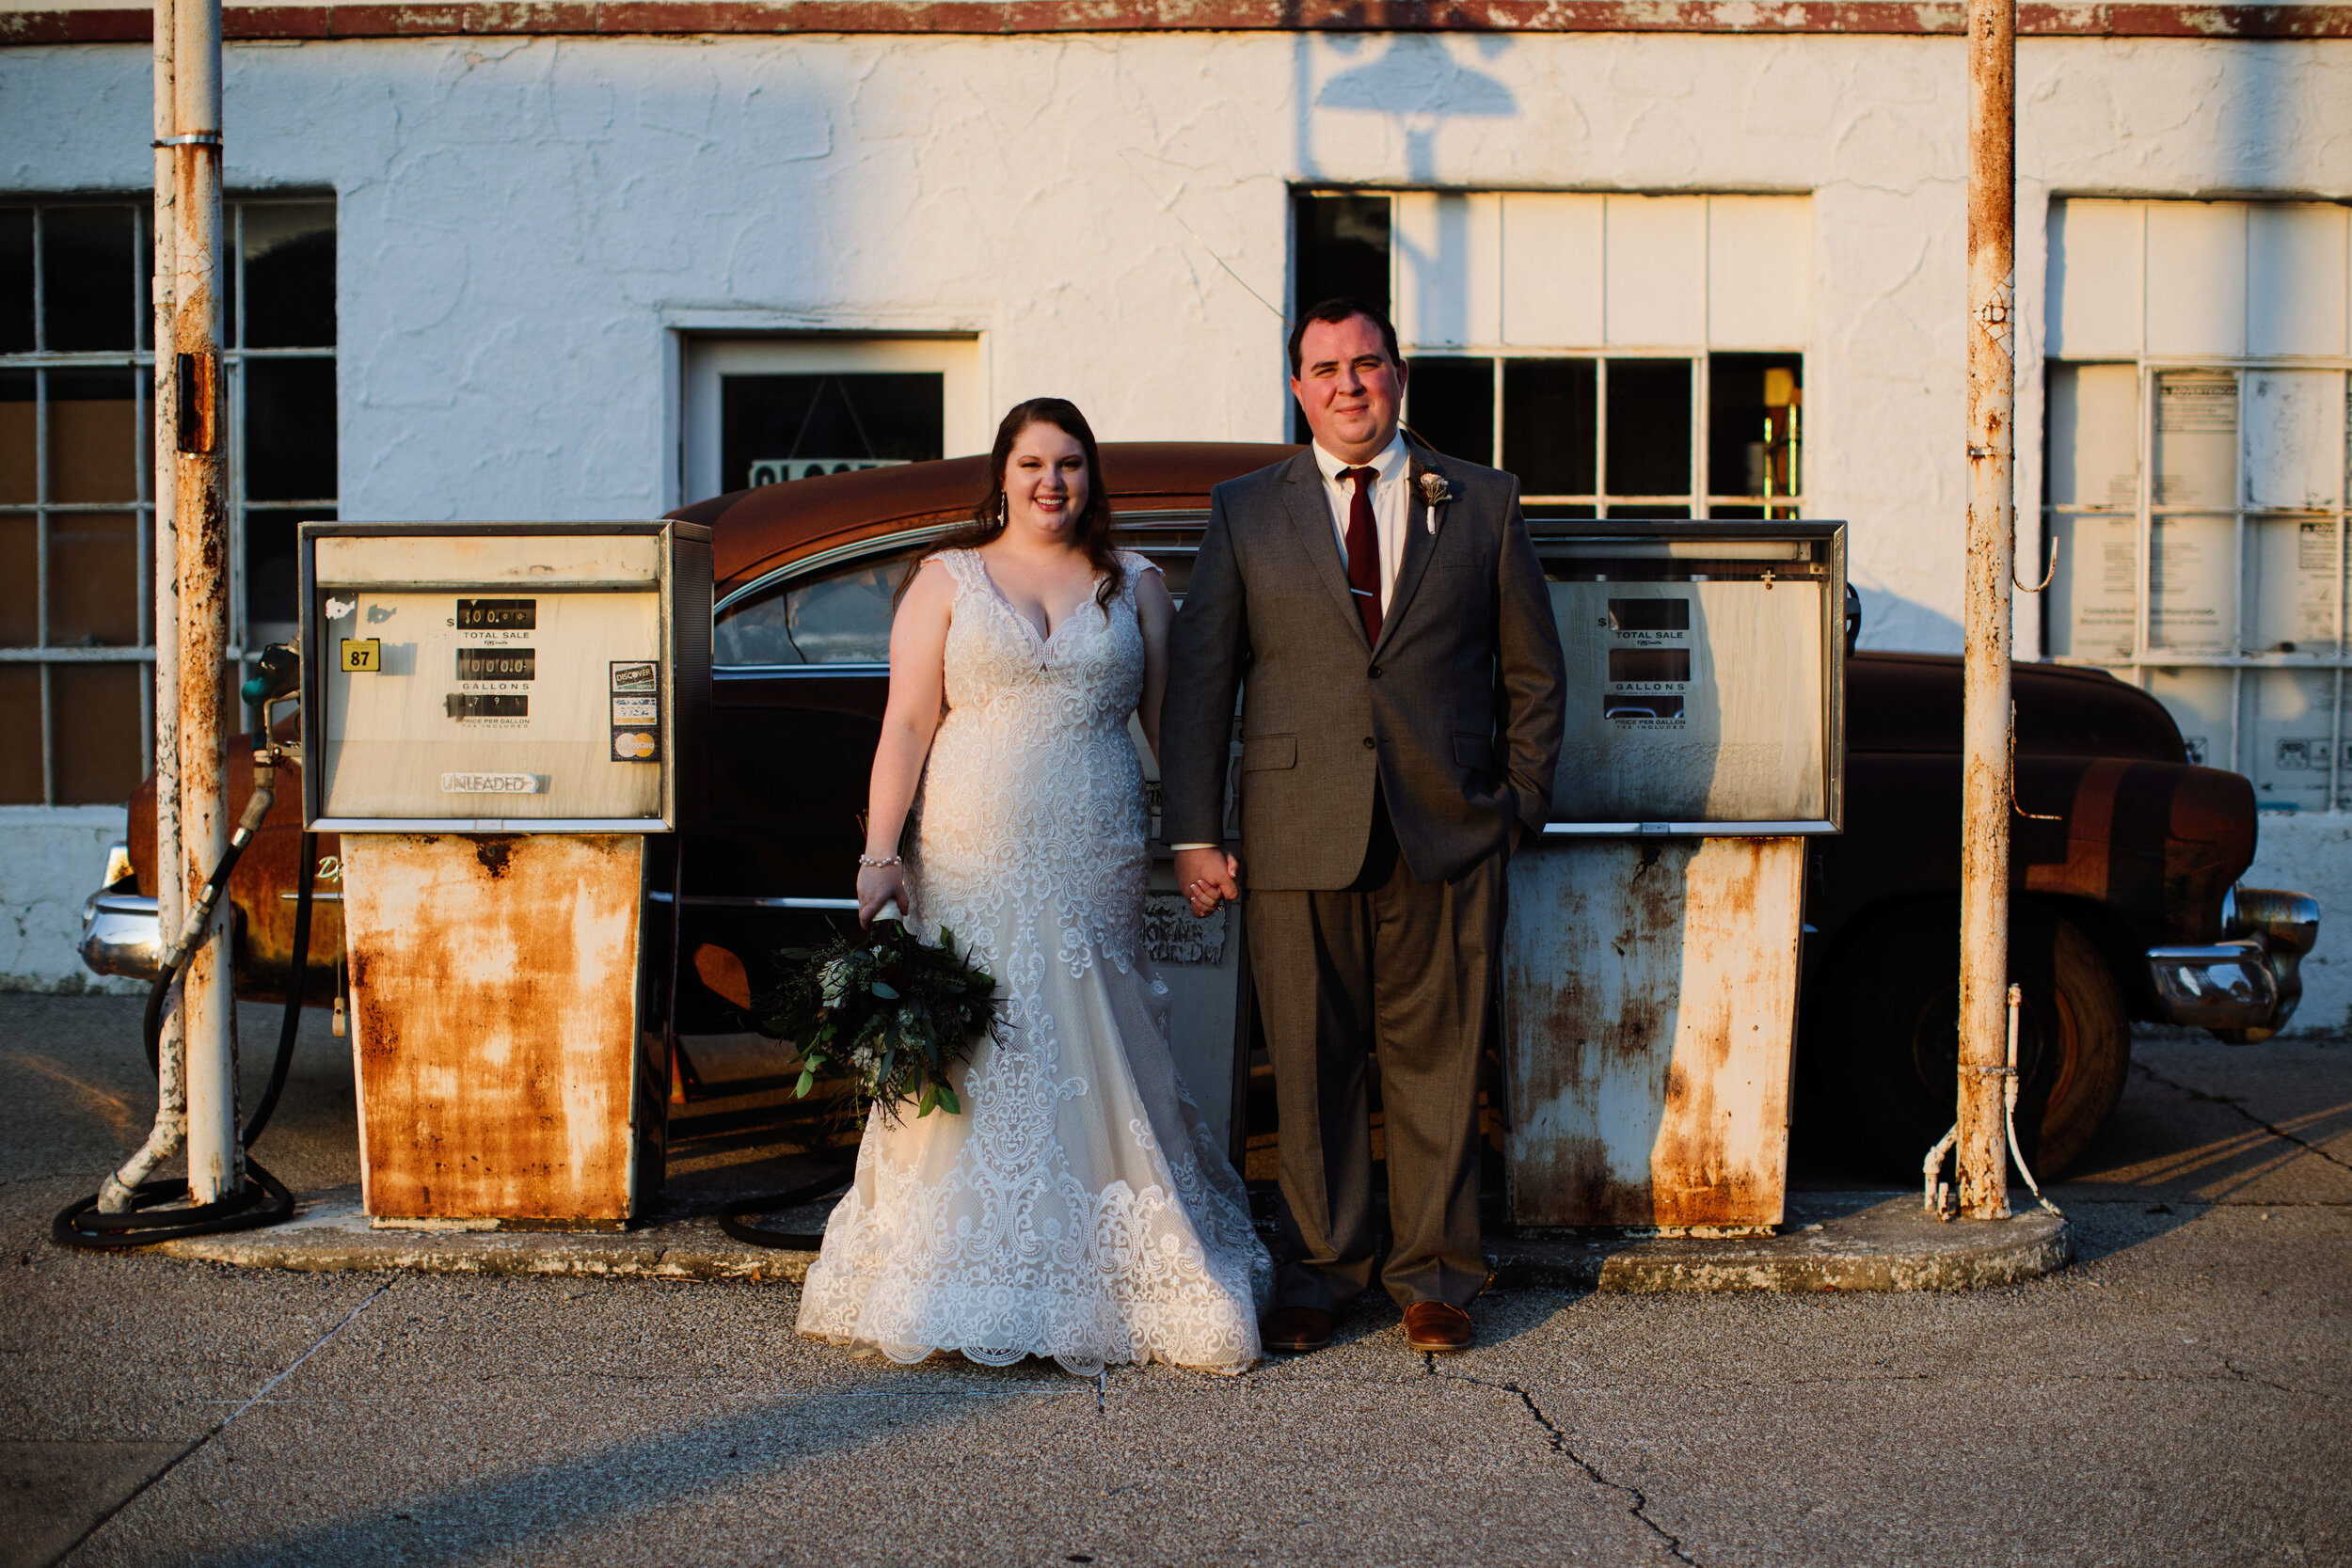 Town Square Paola Kansas_Kindling Wedding Photography_10.JPG